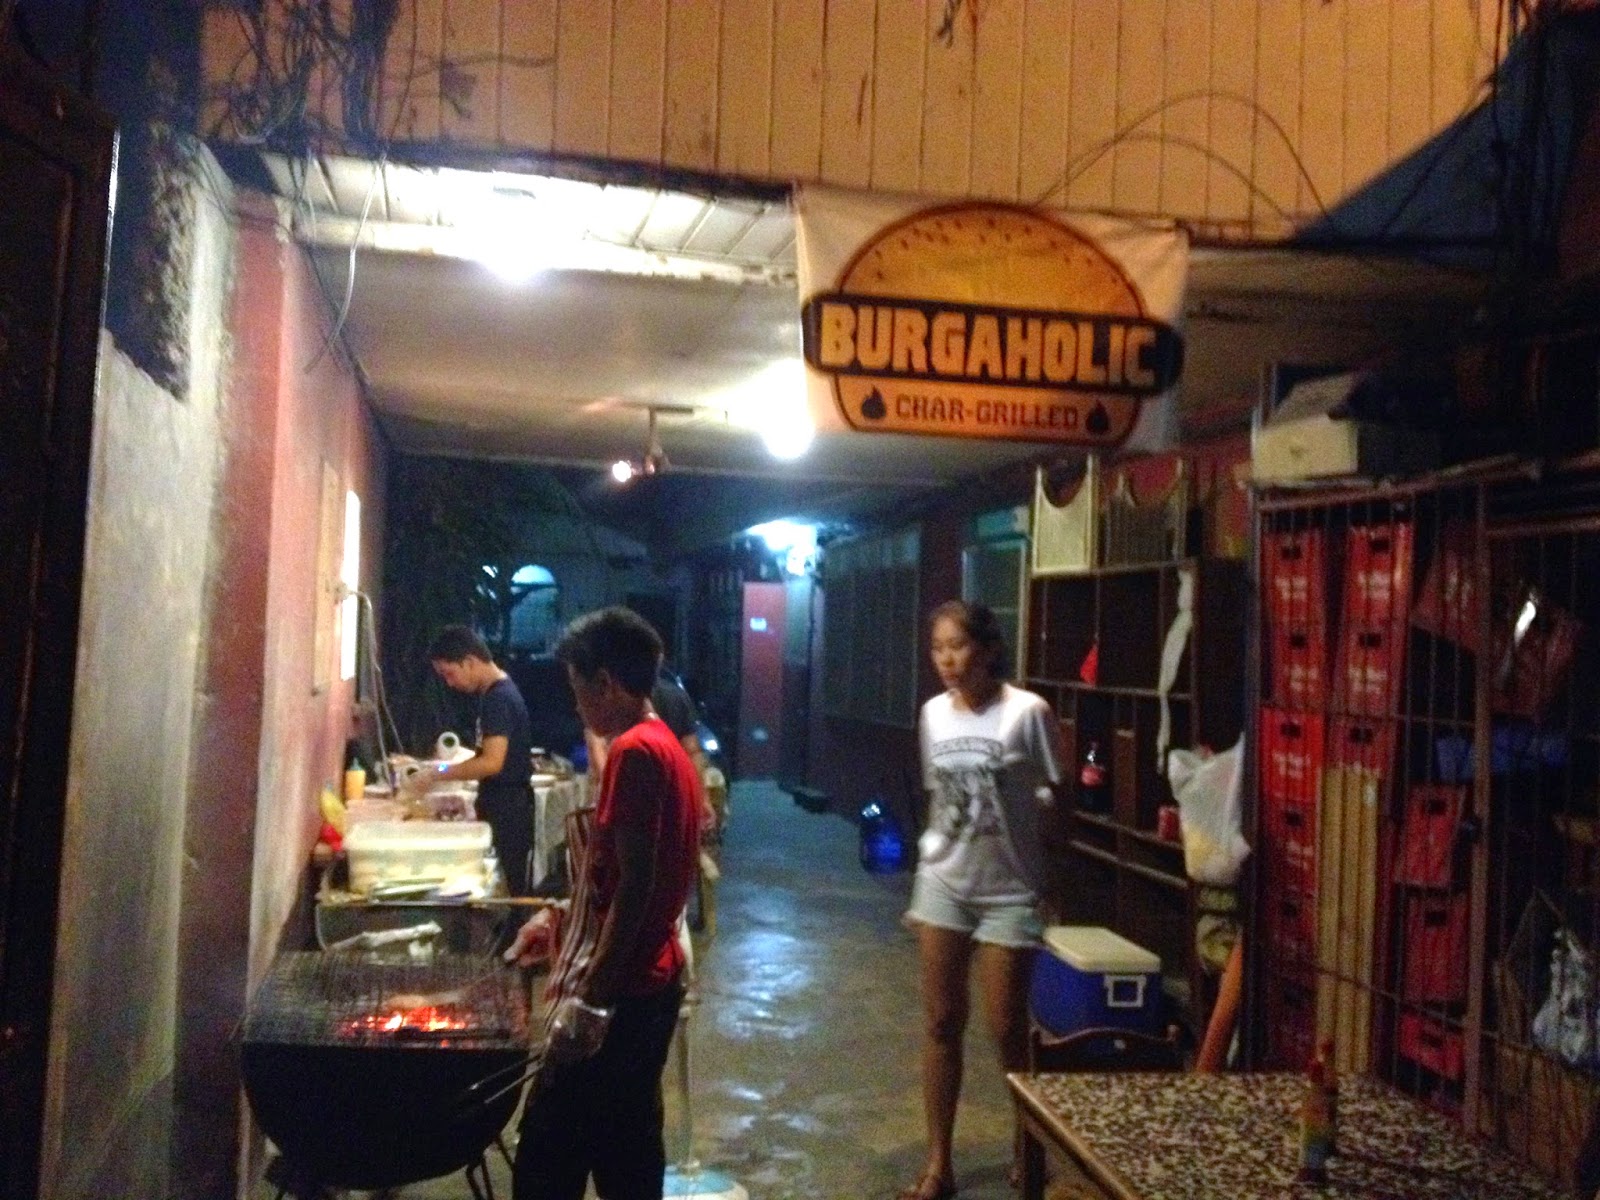 Burgaholic Cebu - Home of the best charcoal grilled burgers